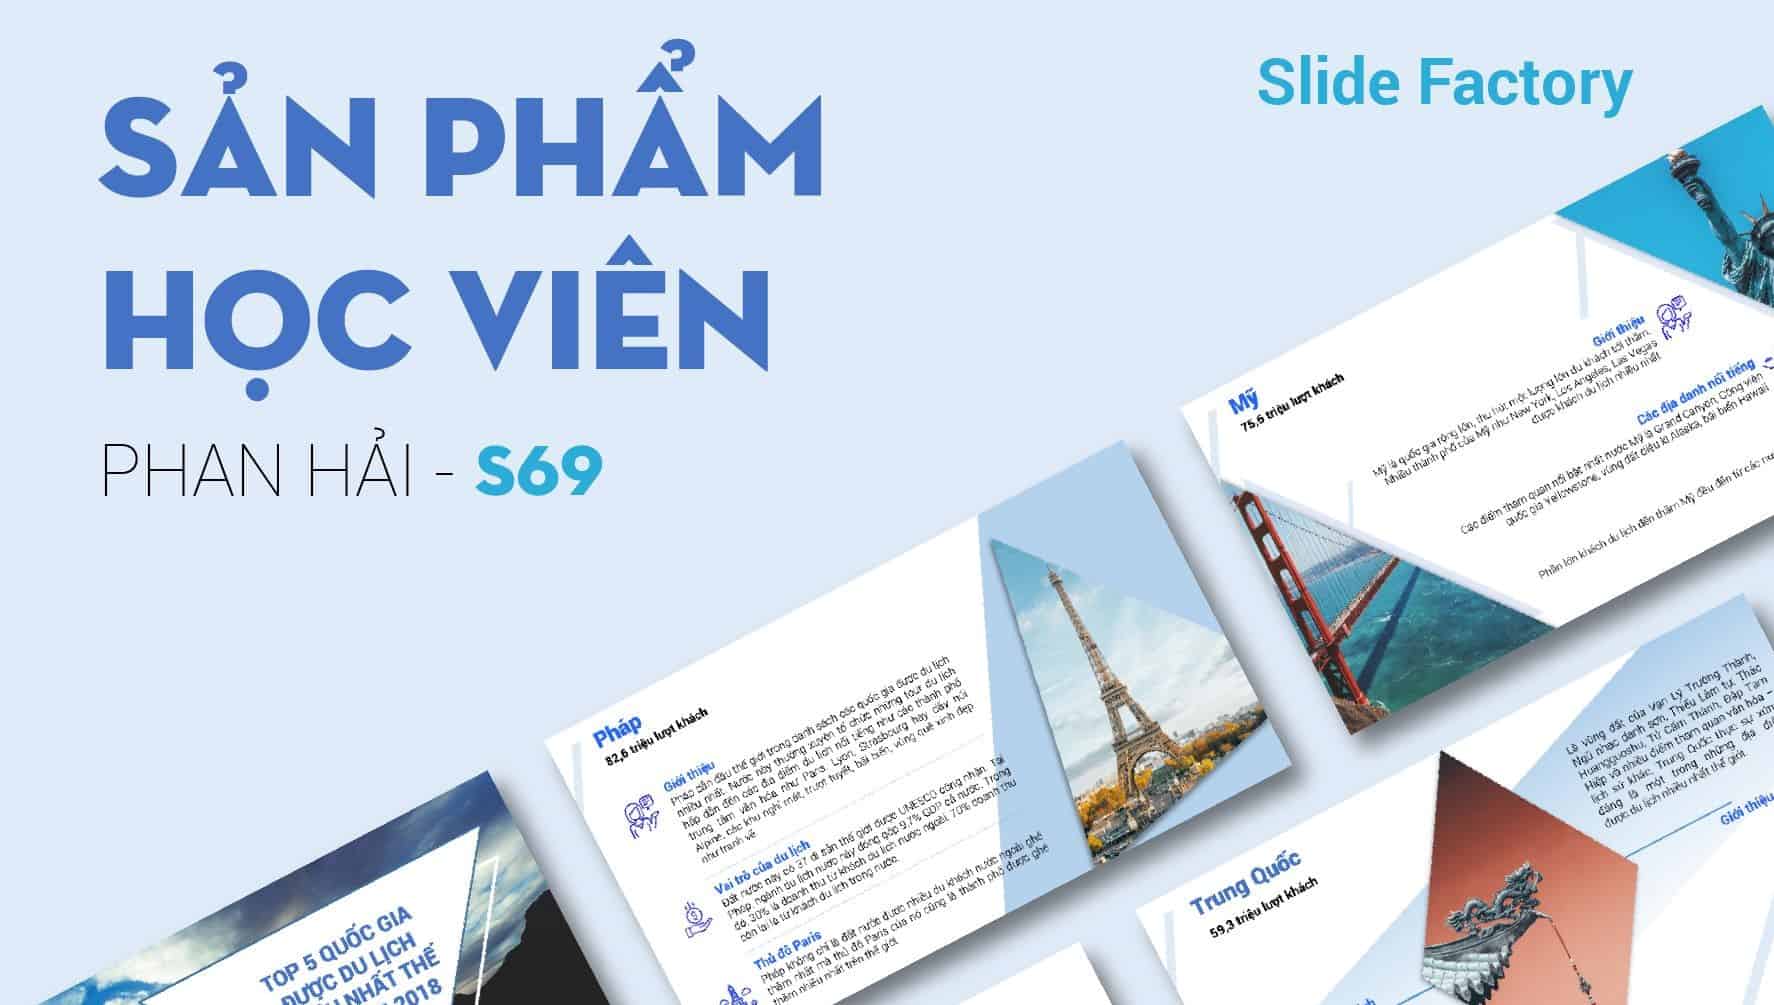 Phan Hải - S69